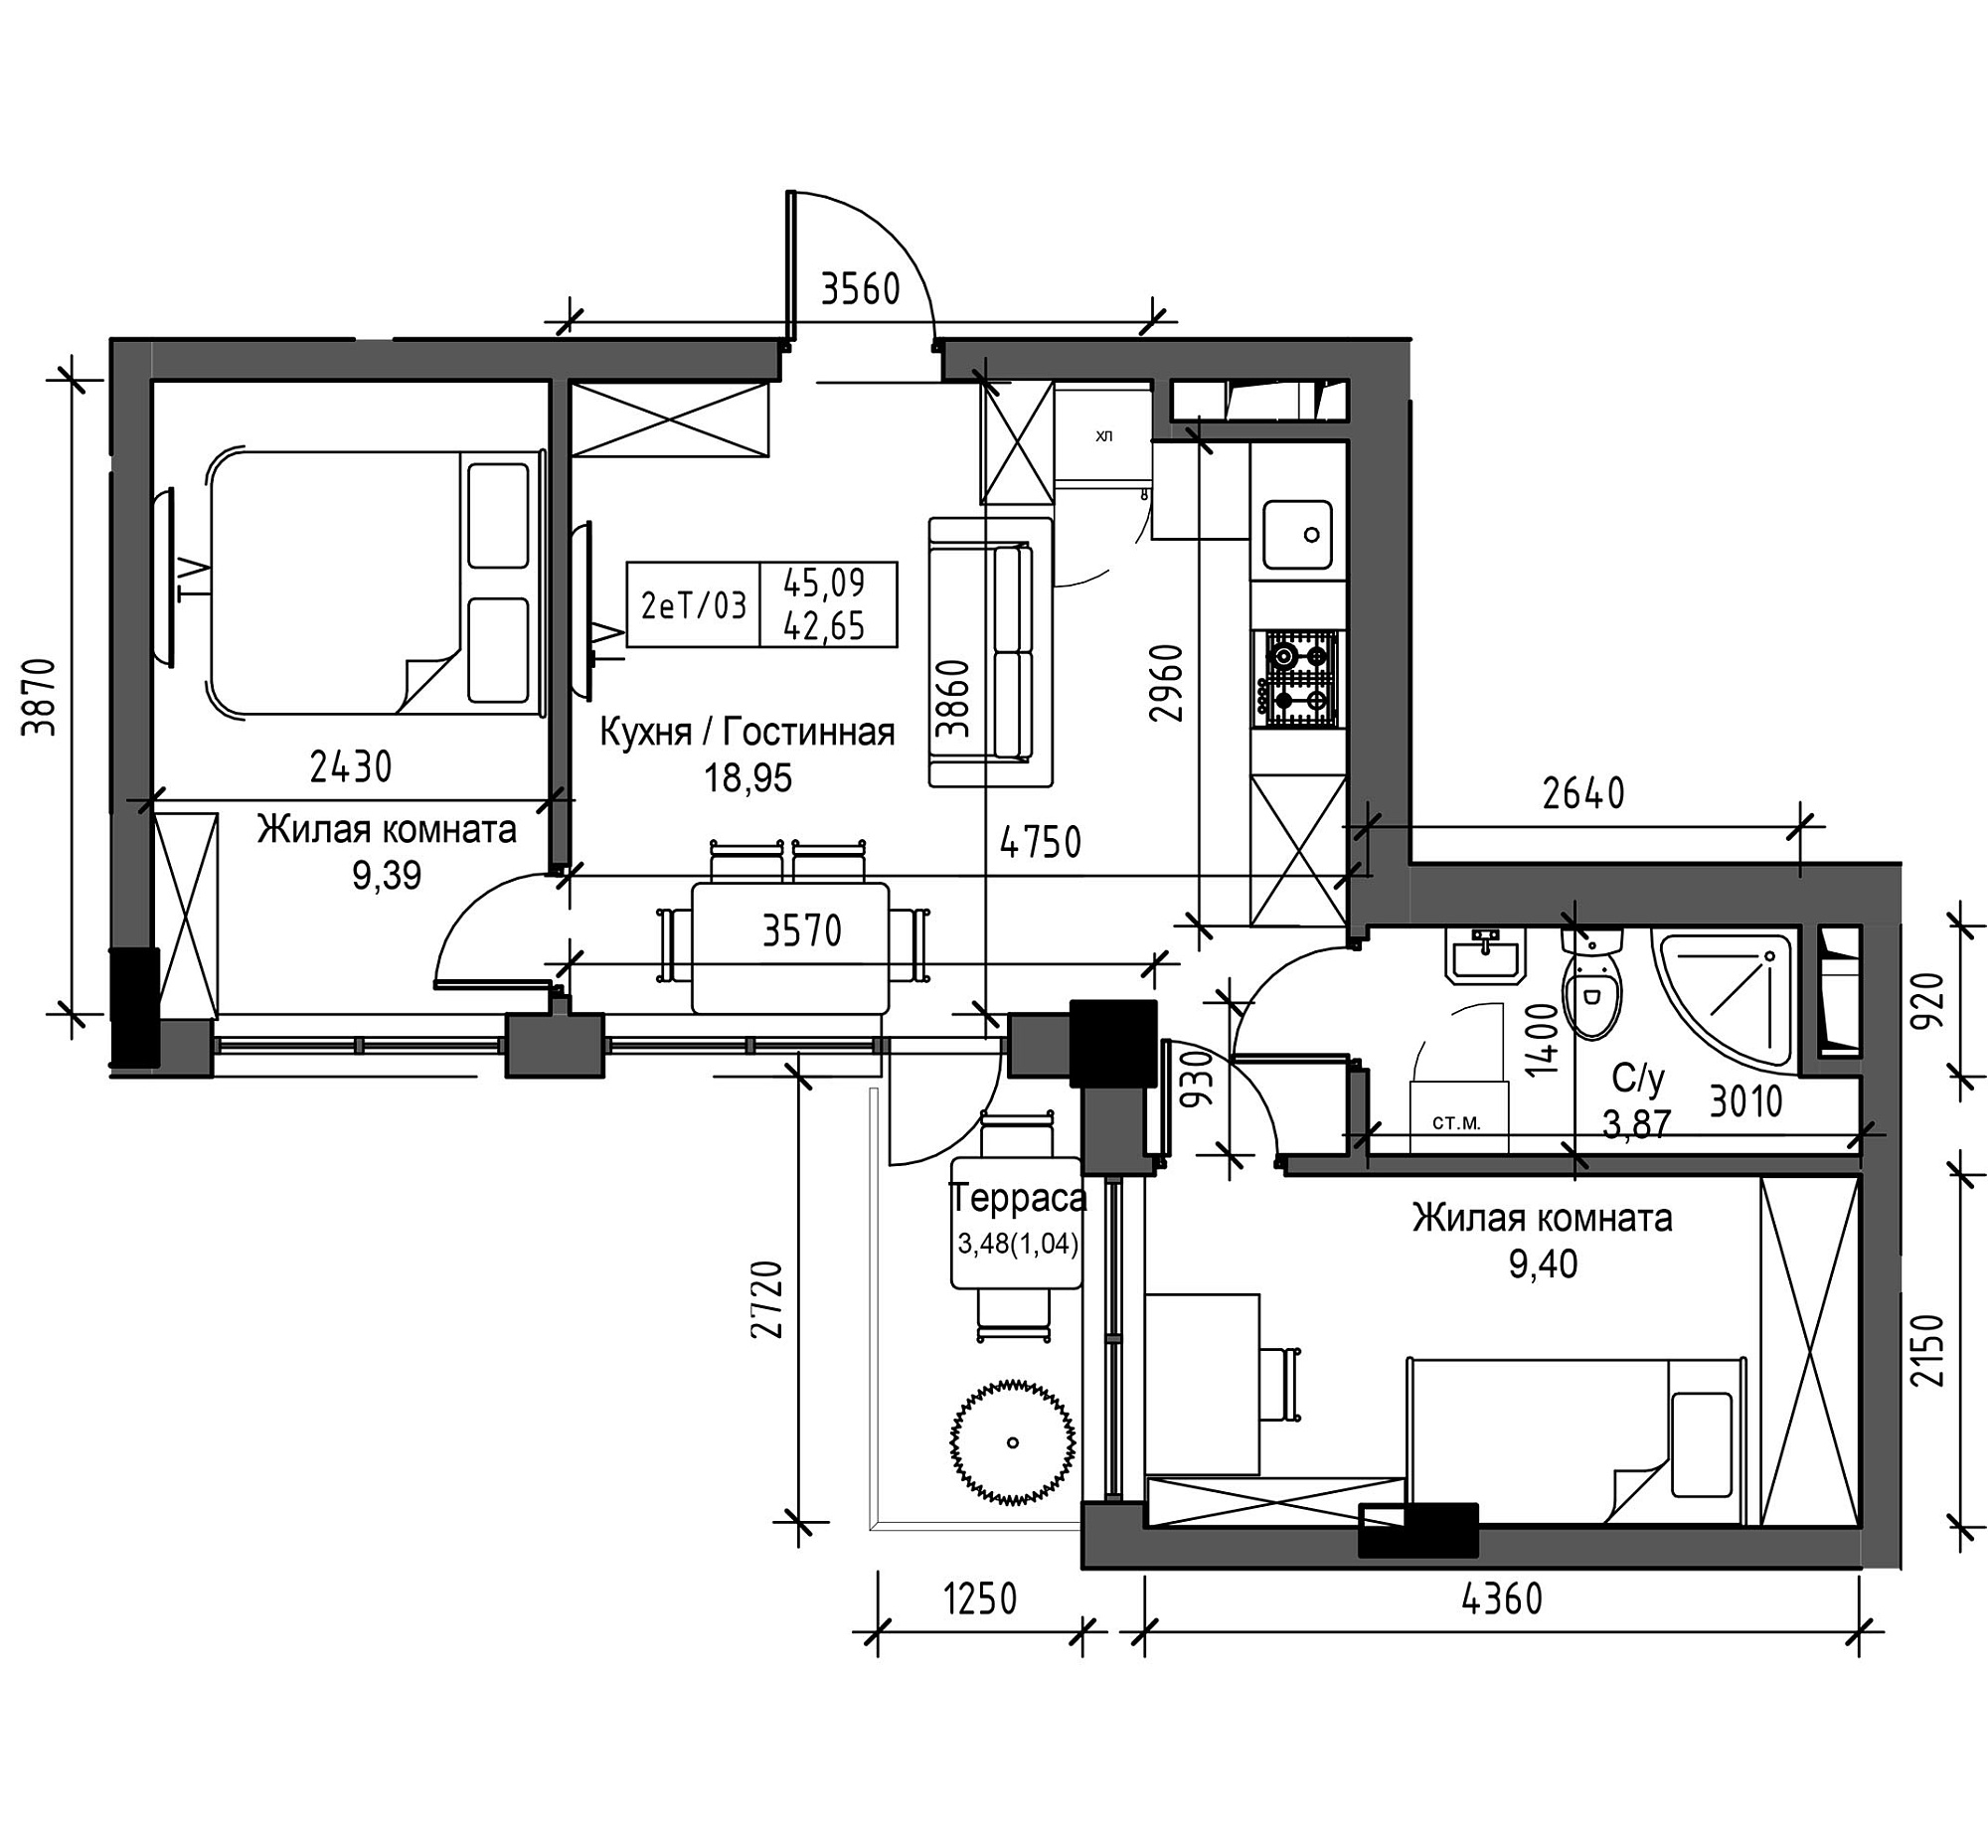 Planning 2-rm flats area 42.65m2, UM-003-03/0012.